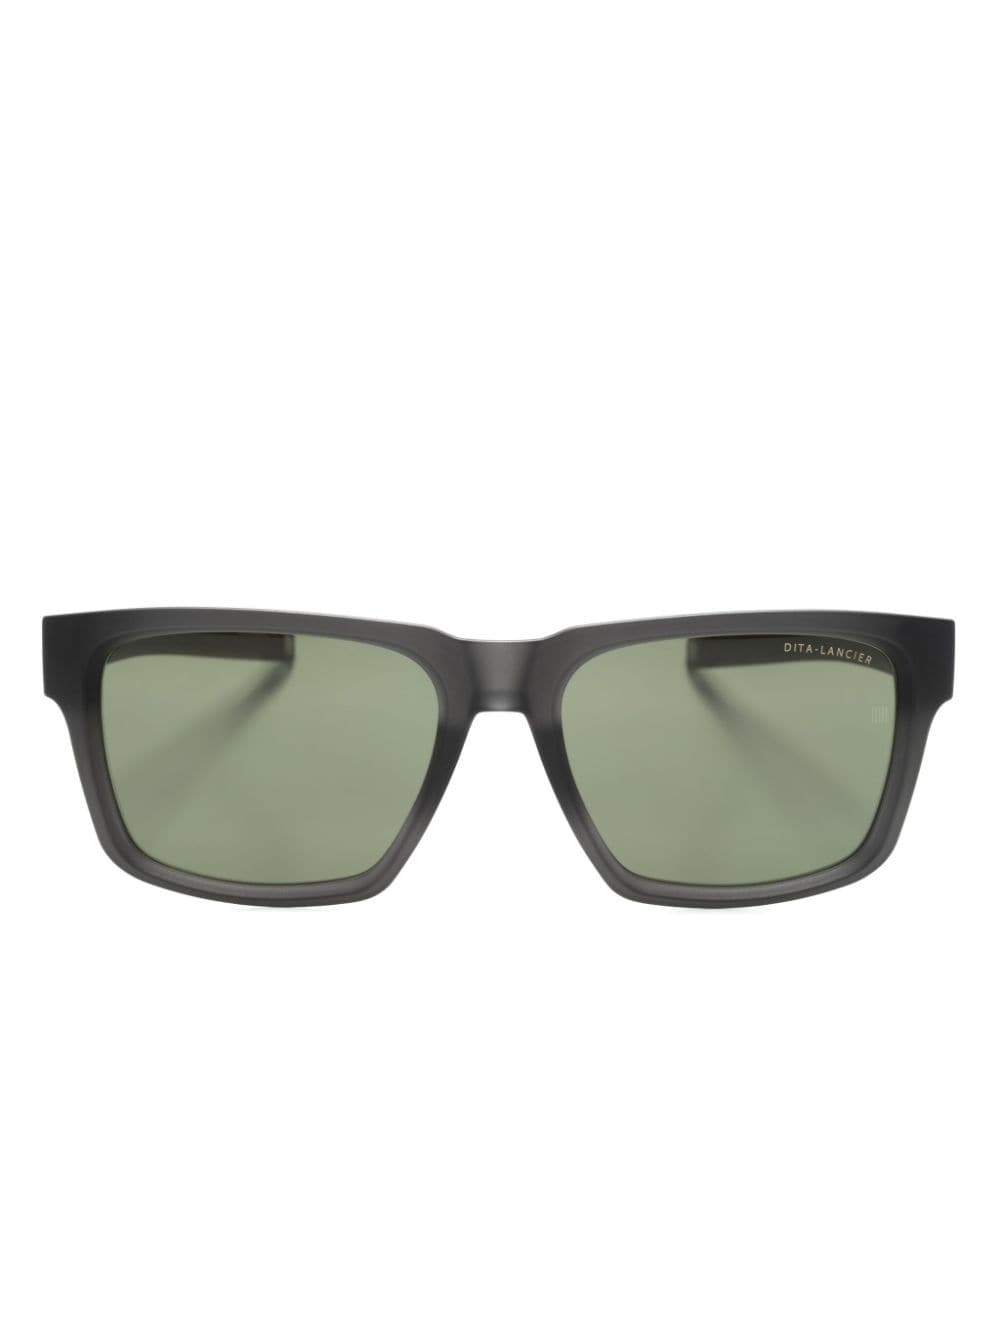 rectangle-shape sunglasses - 1